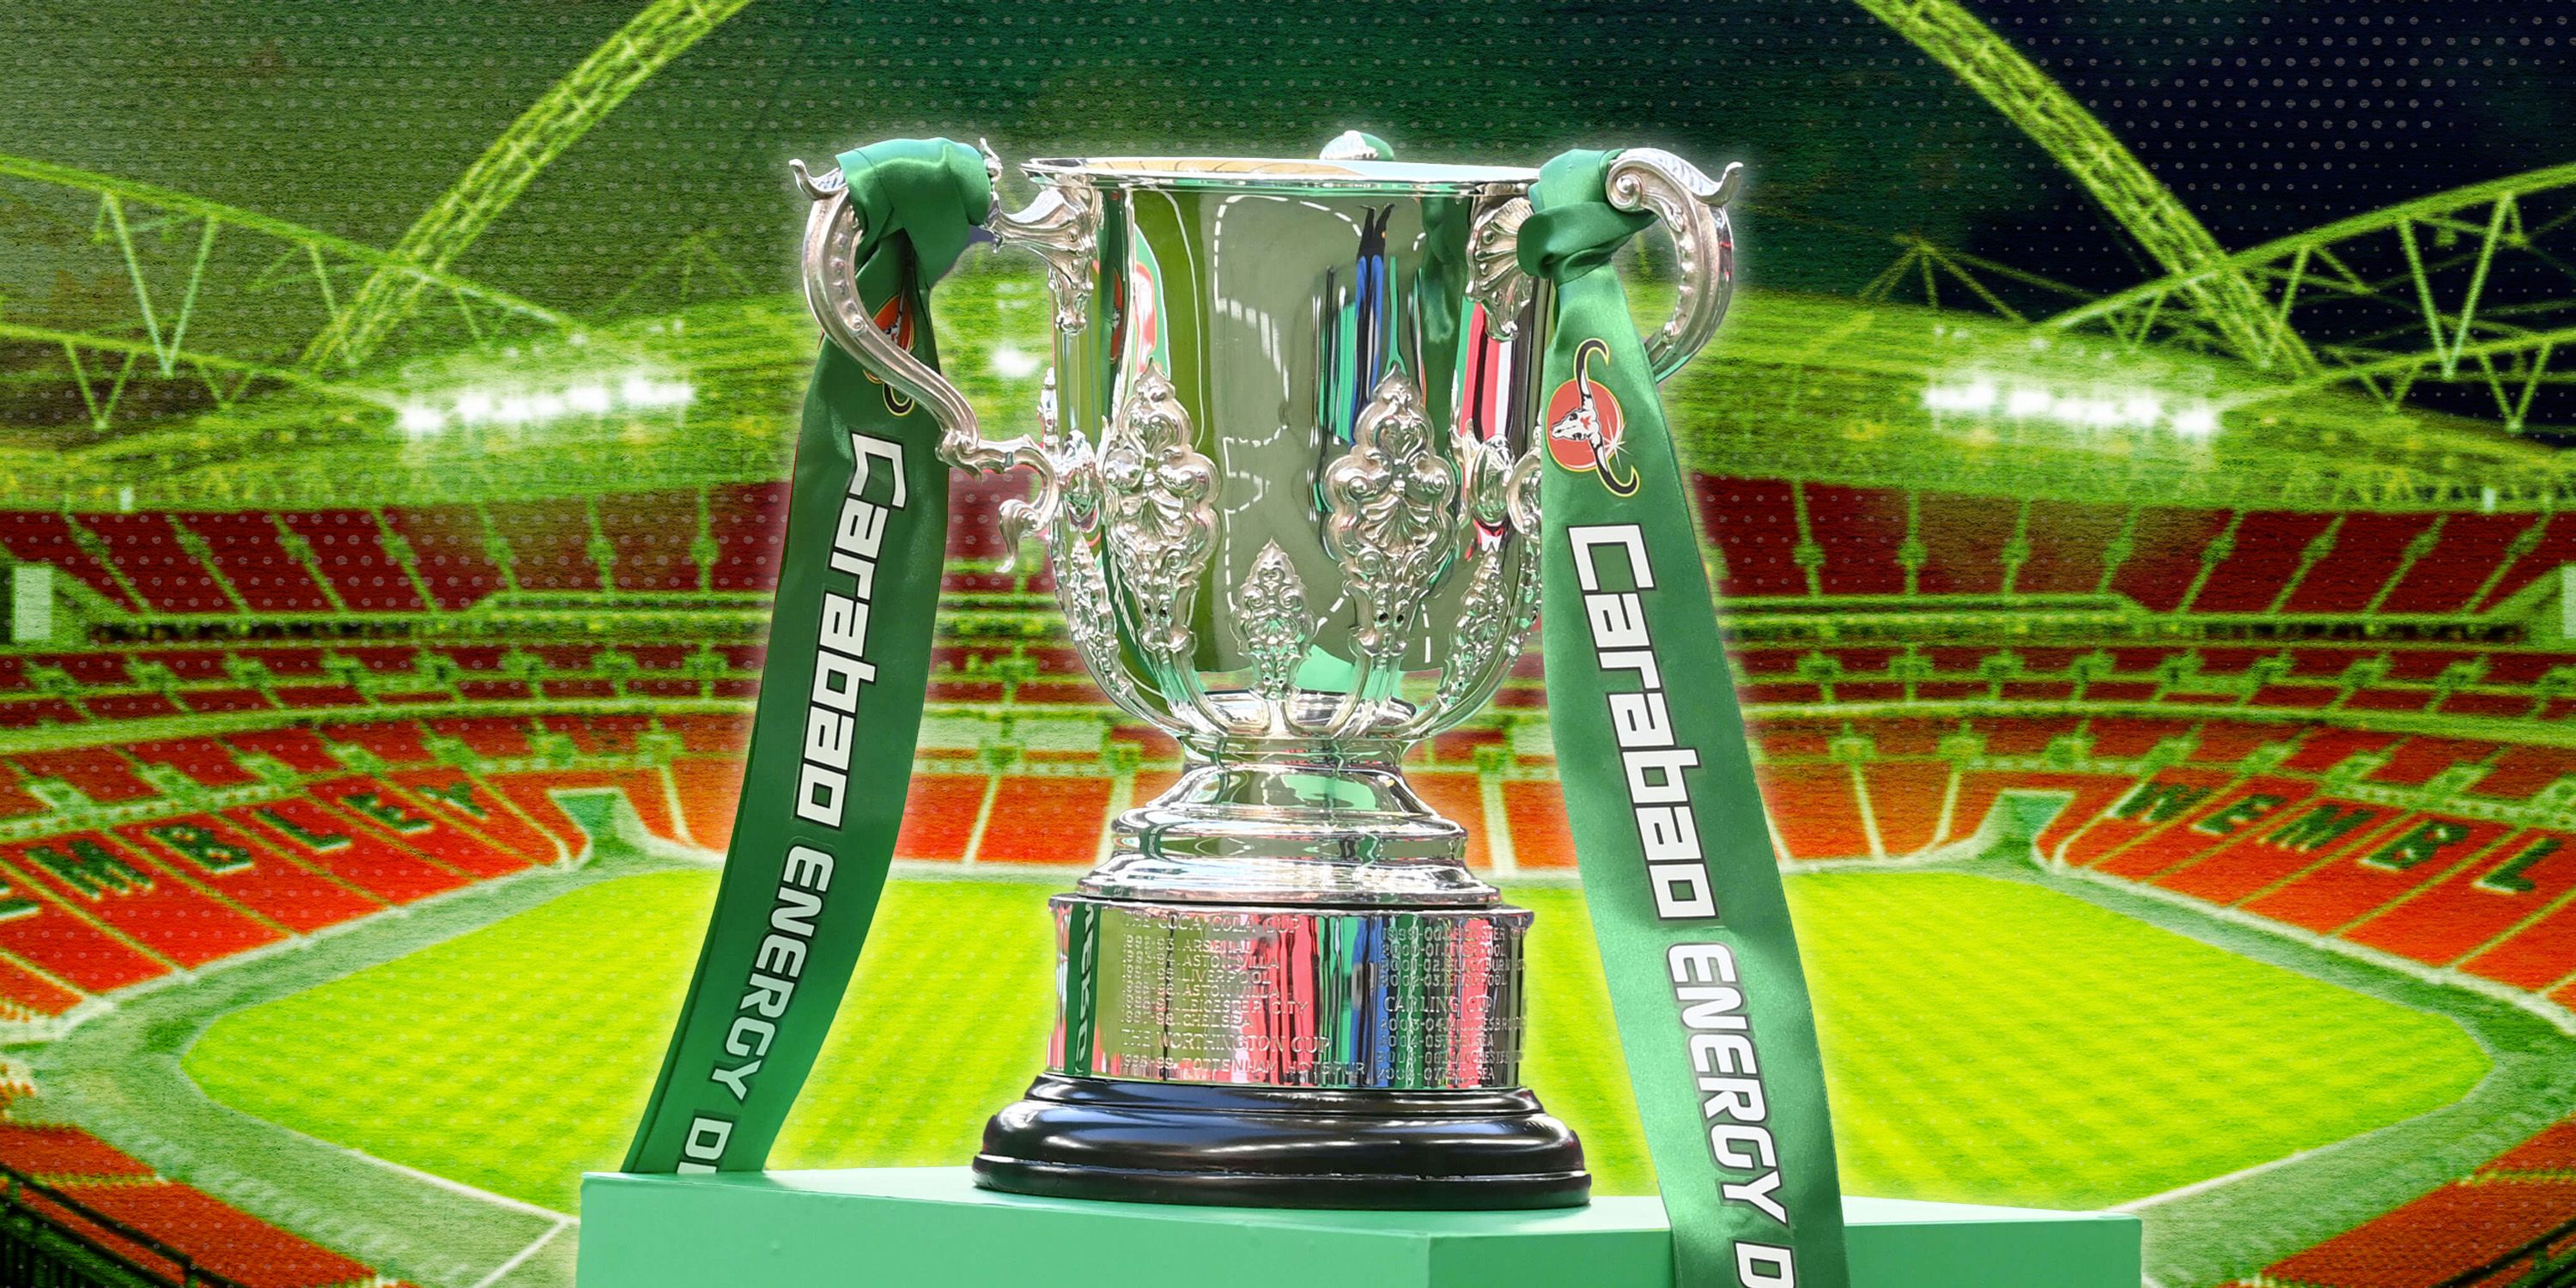 The Carabao Cup on display at Wembley Stadium.